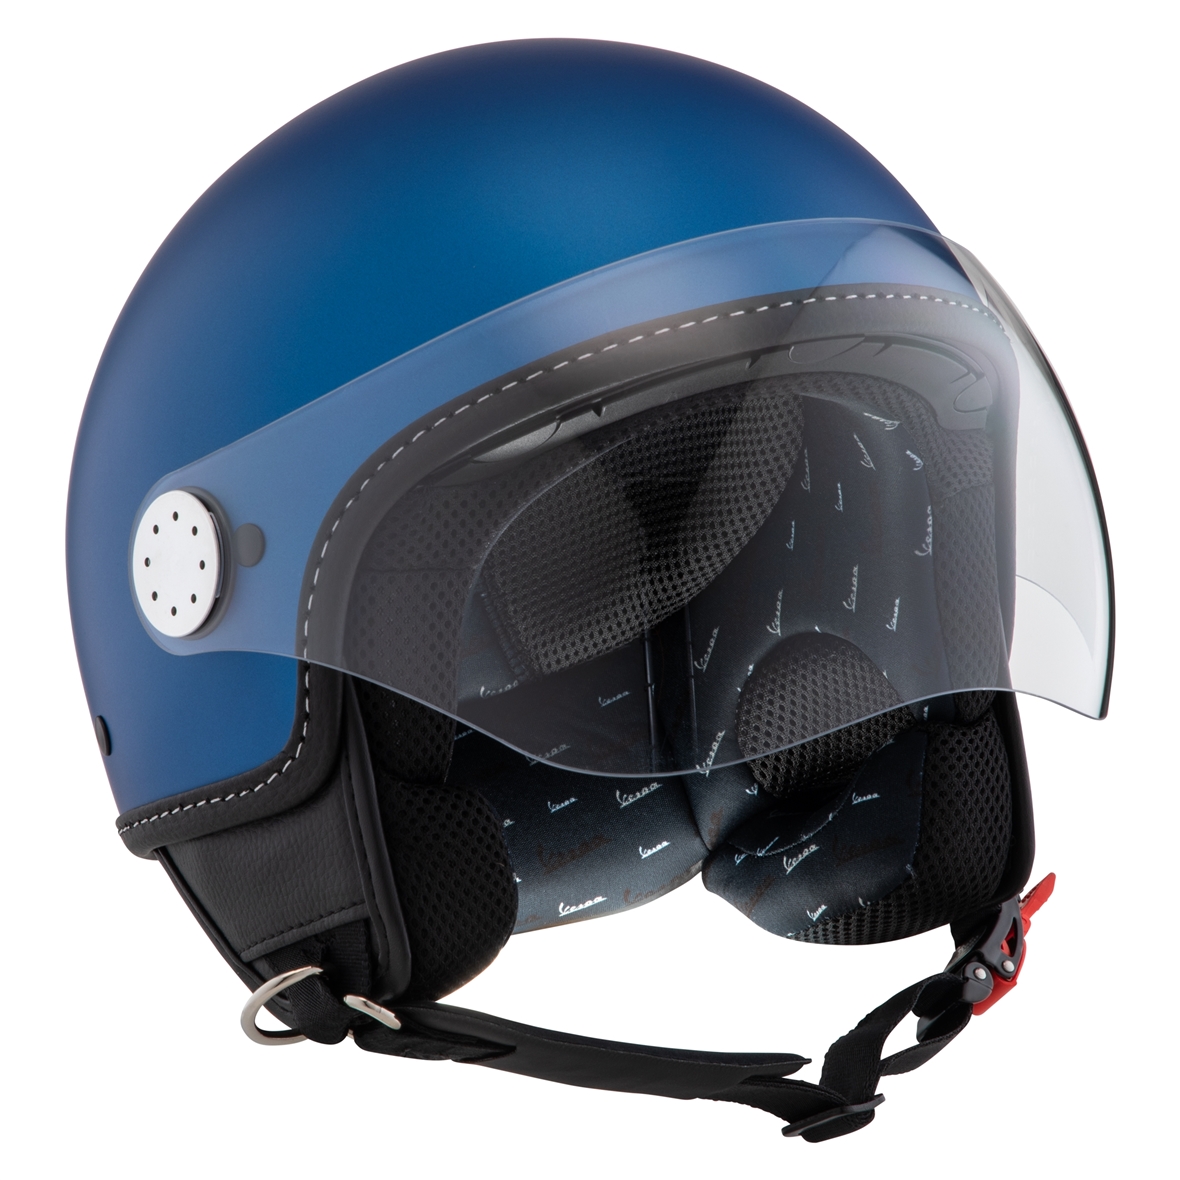 Original Vespa helmet Visor 2.0 jet helmet